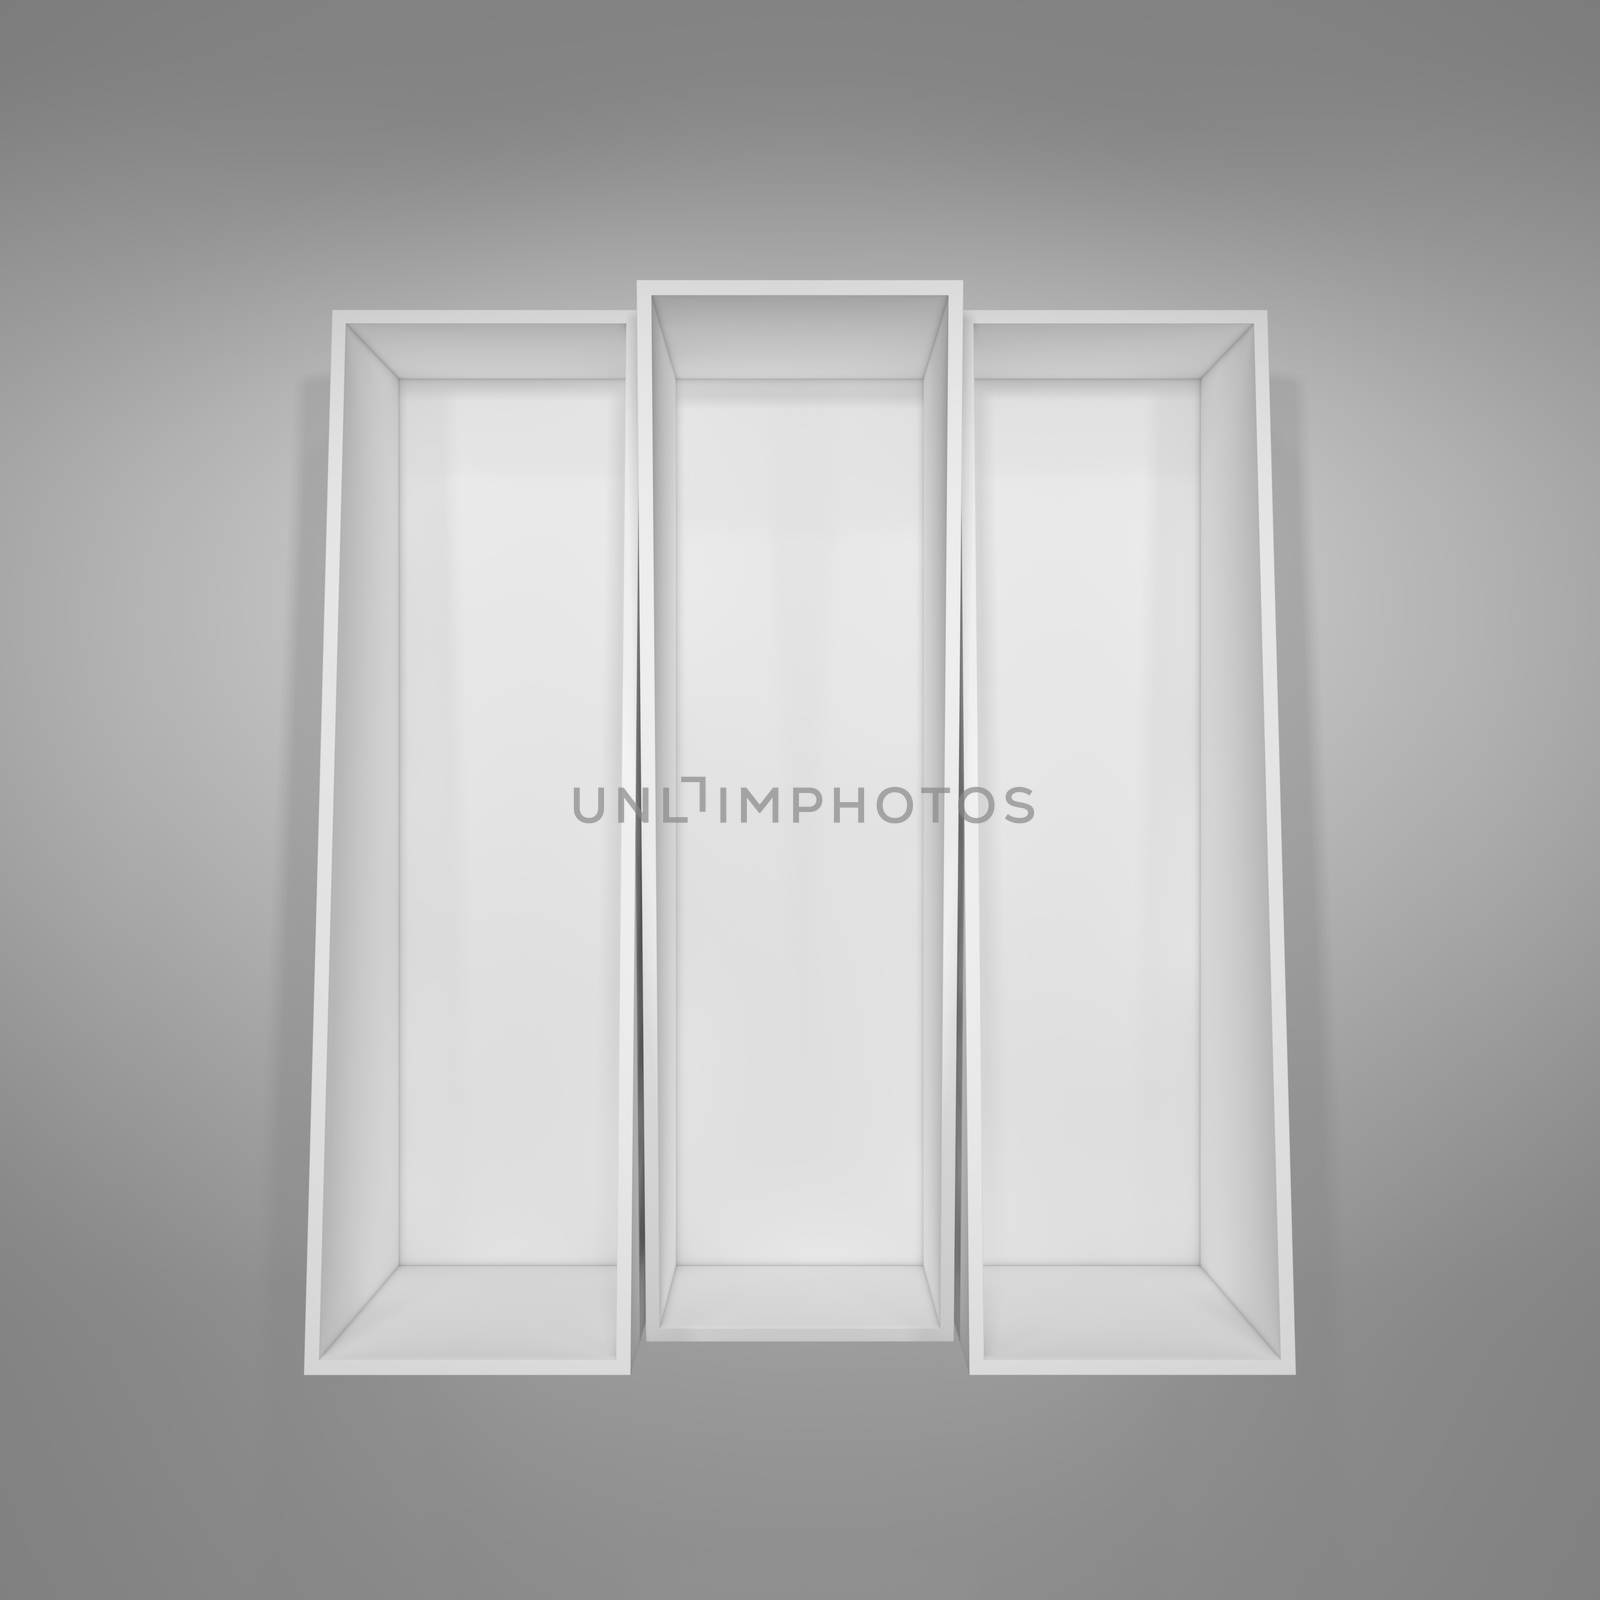 Illuminated white shelf for presentations. Gray background. 3D illustration